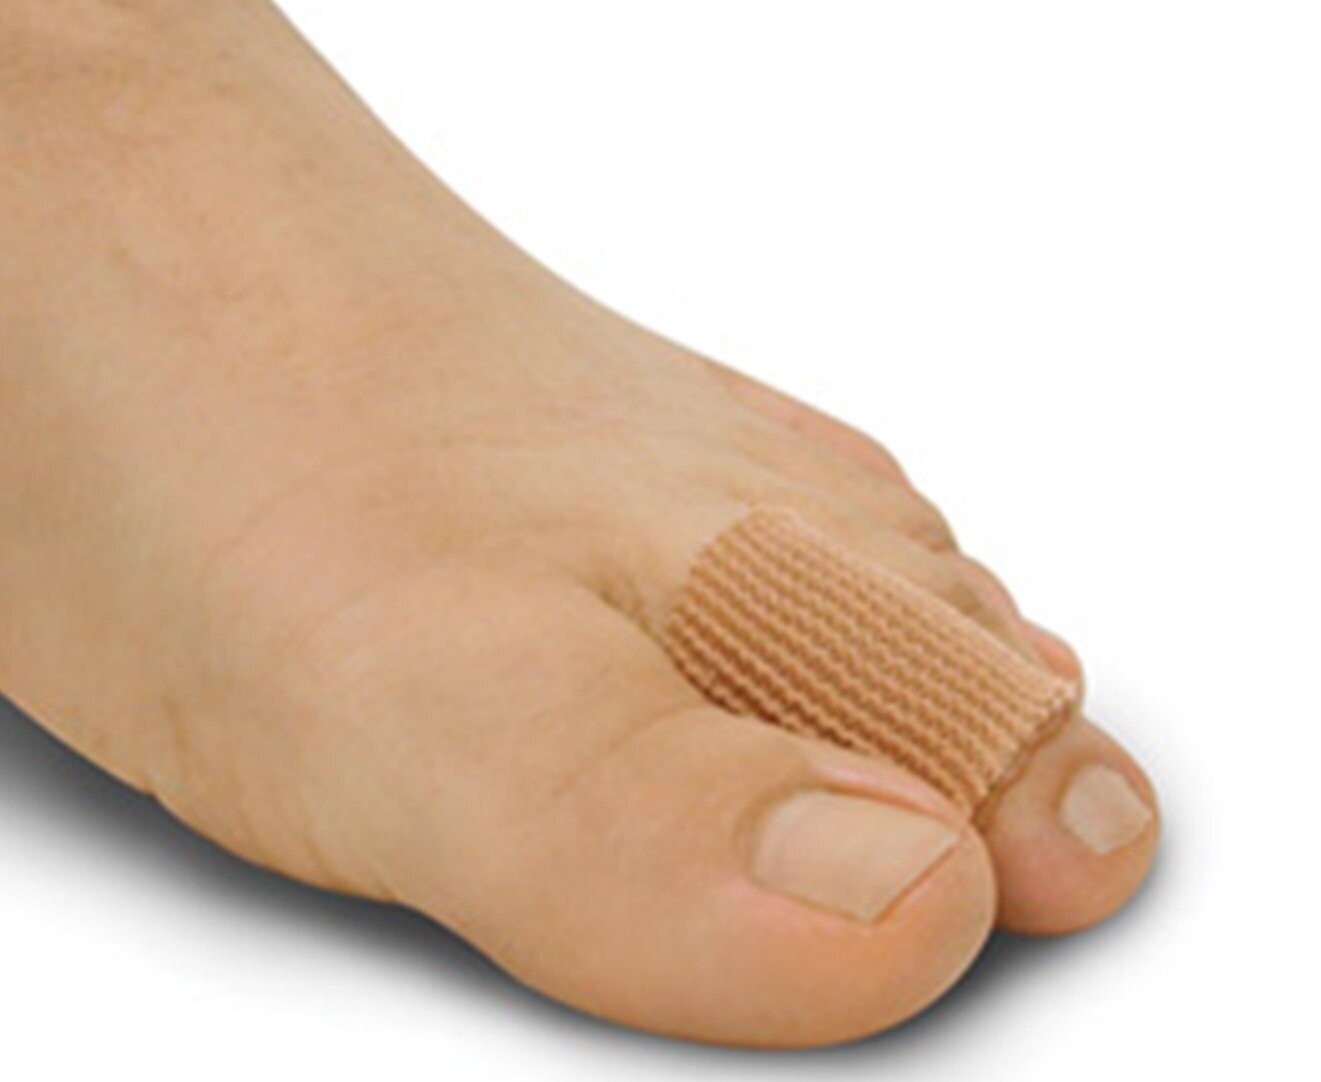 DIGI TUBE 1" Professional Foot Care SMALL